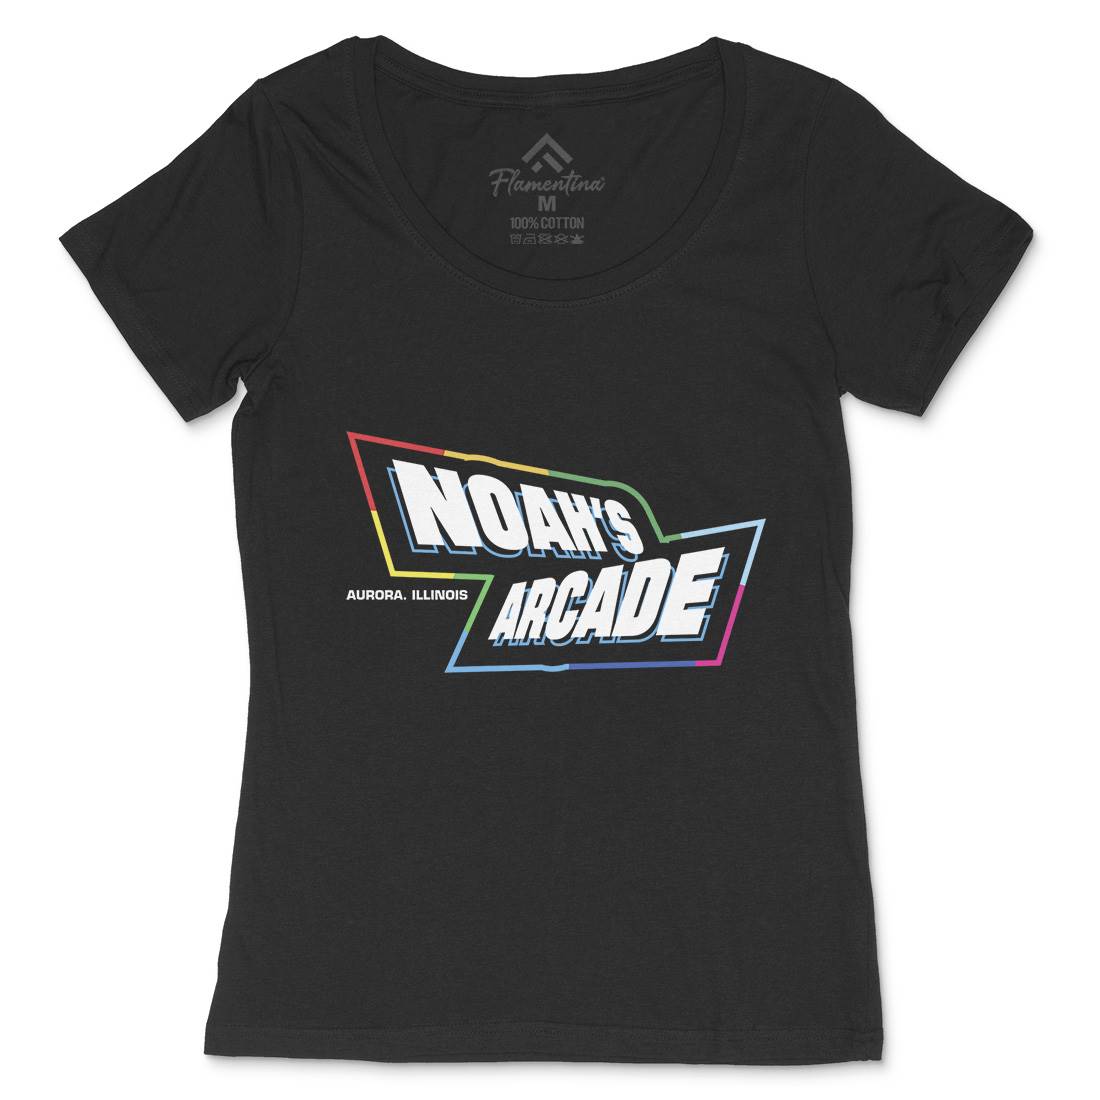 Noahs Arcade Womens Scoop Neck T-Shirt Retro D298